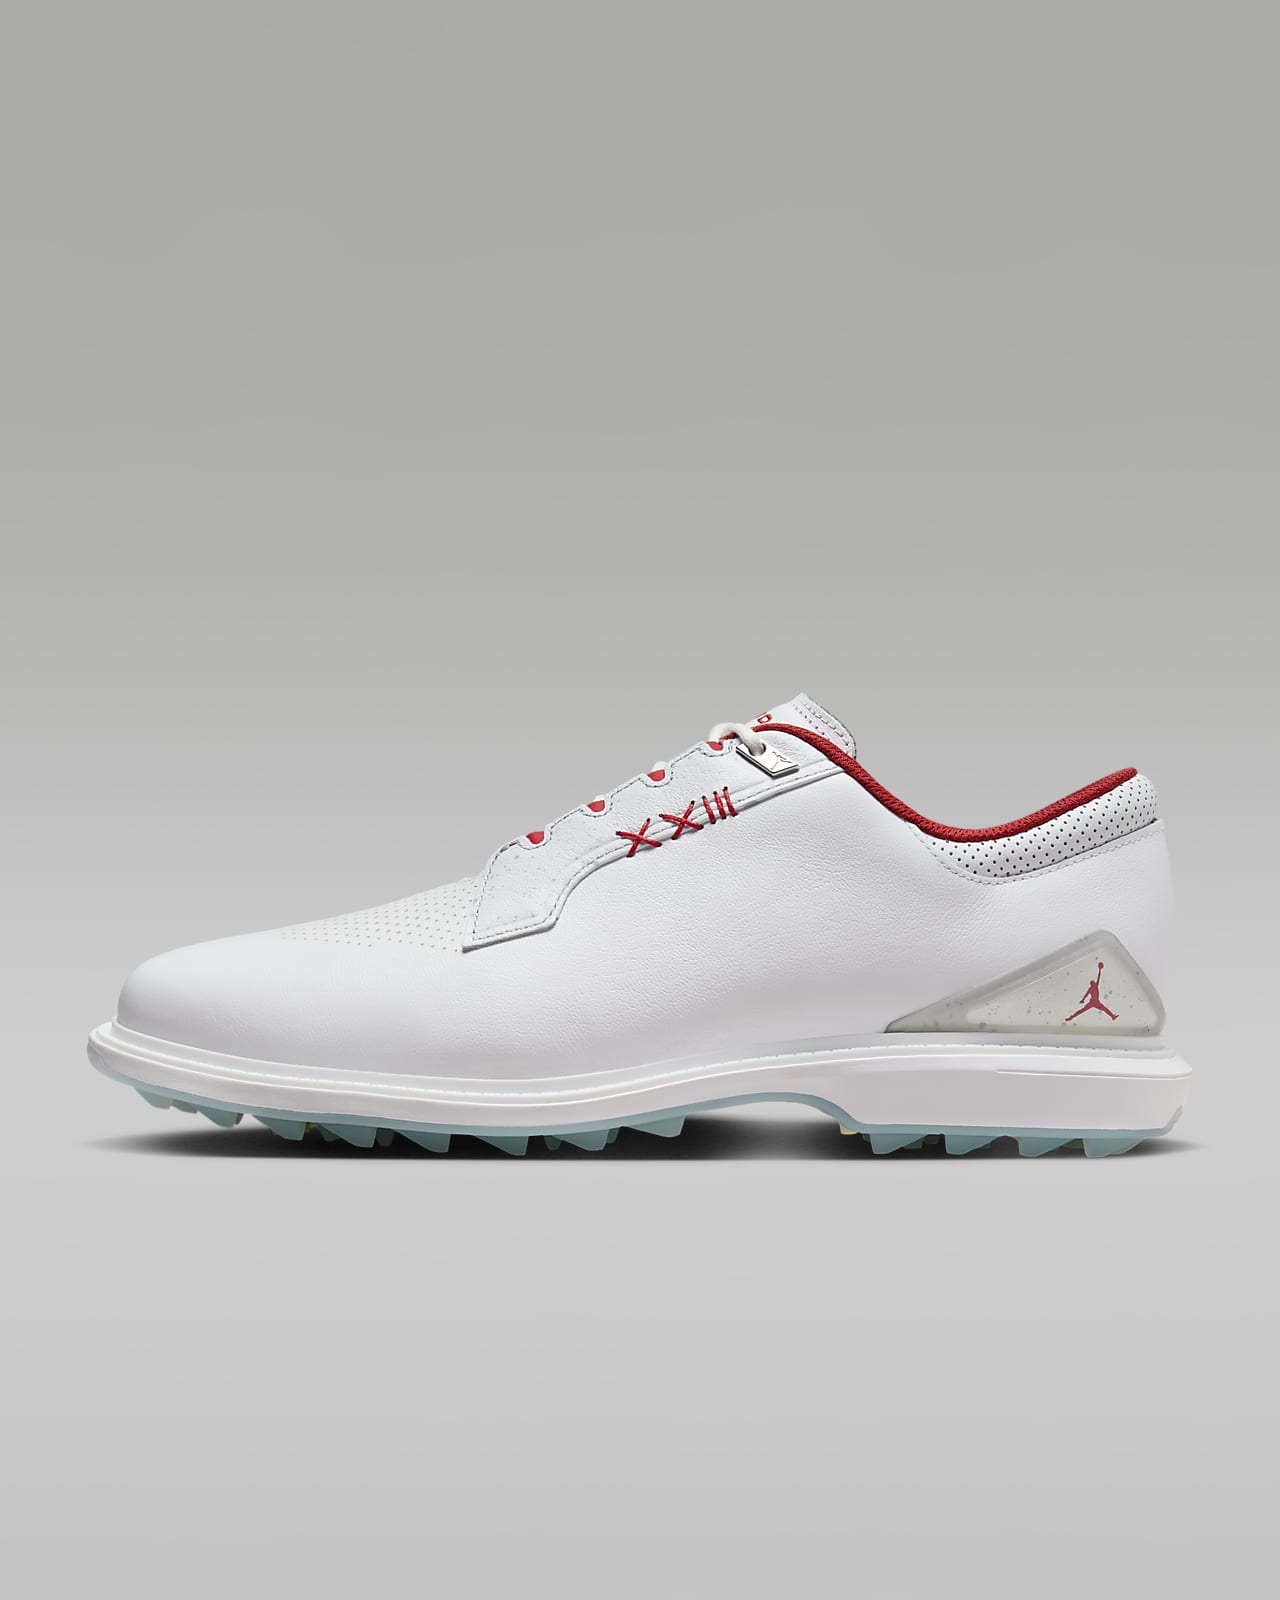 Air Jordan 1 Golf Shoe